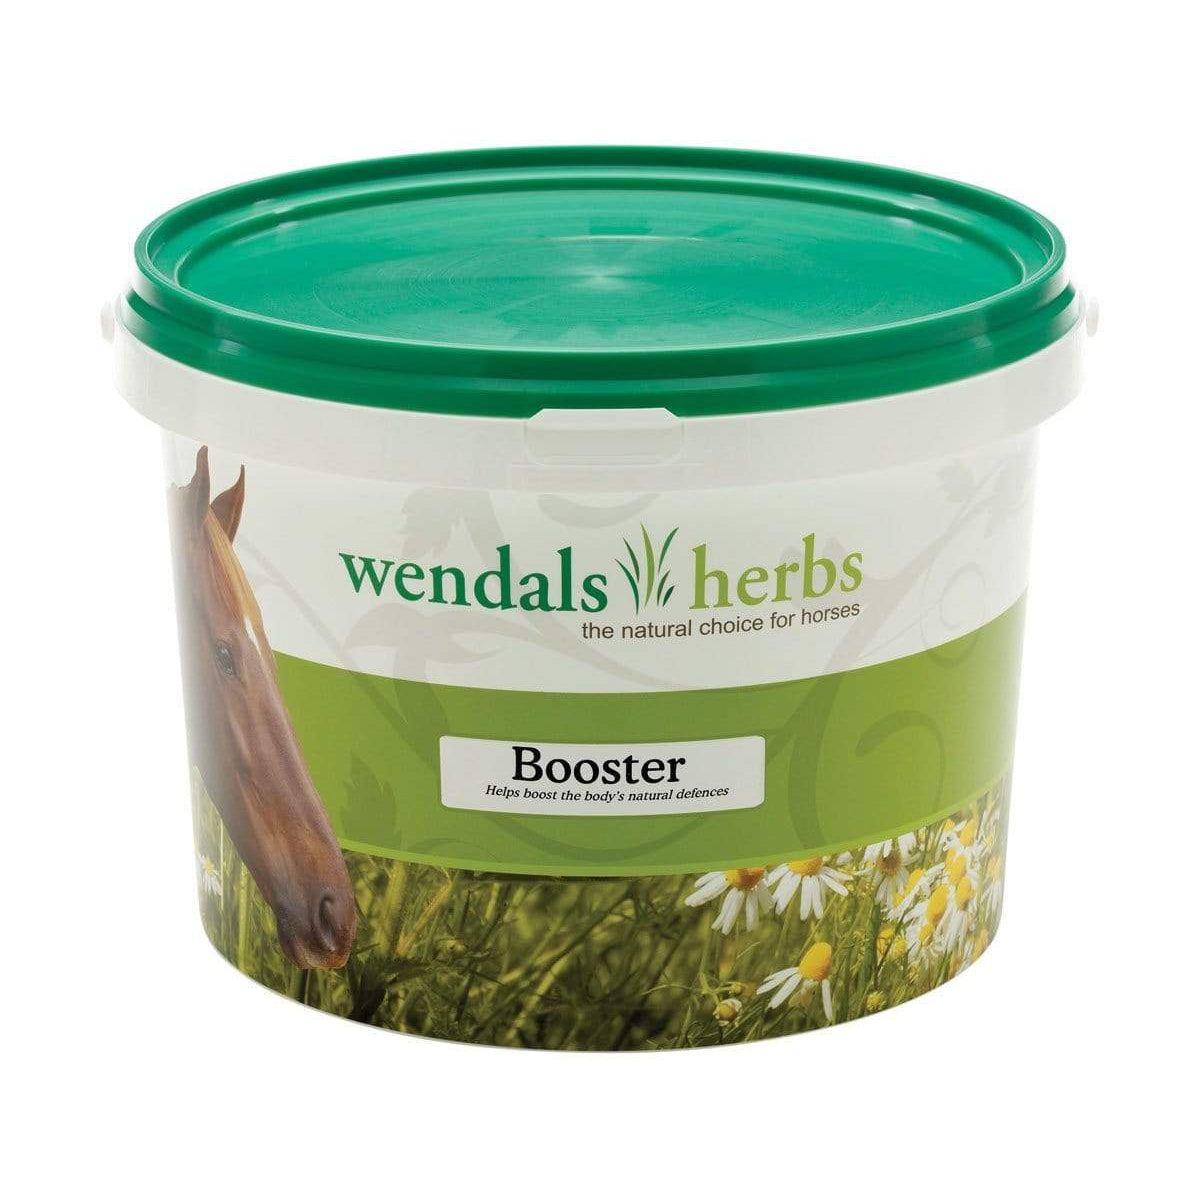 Wendals Herbs Booster